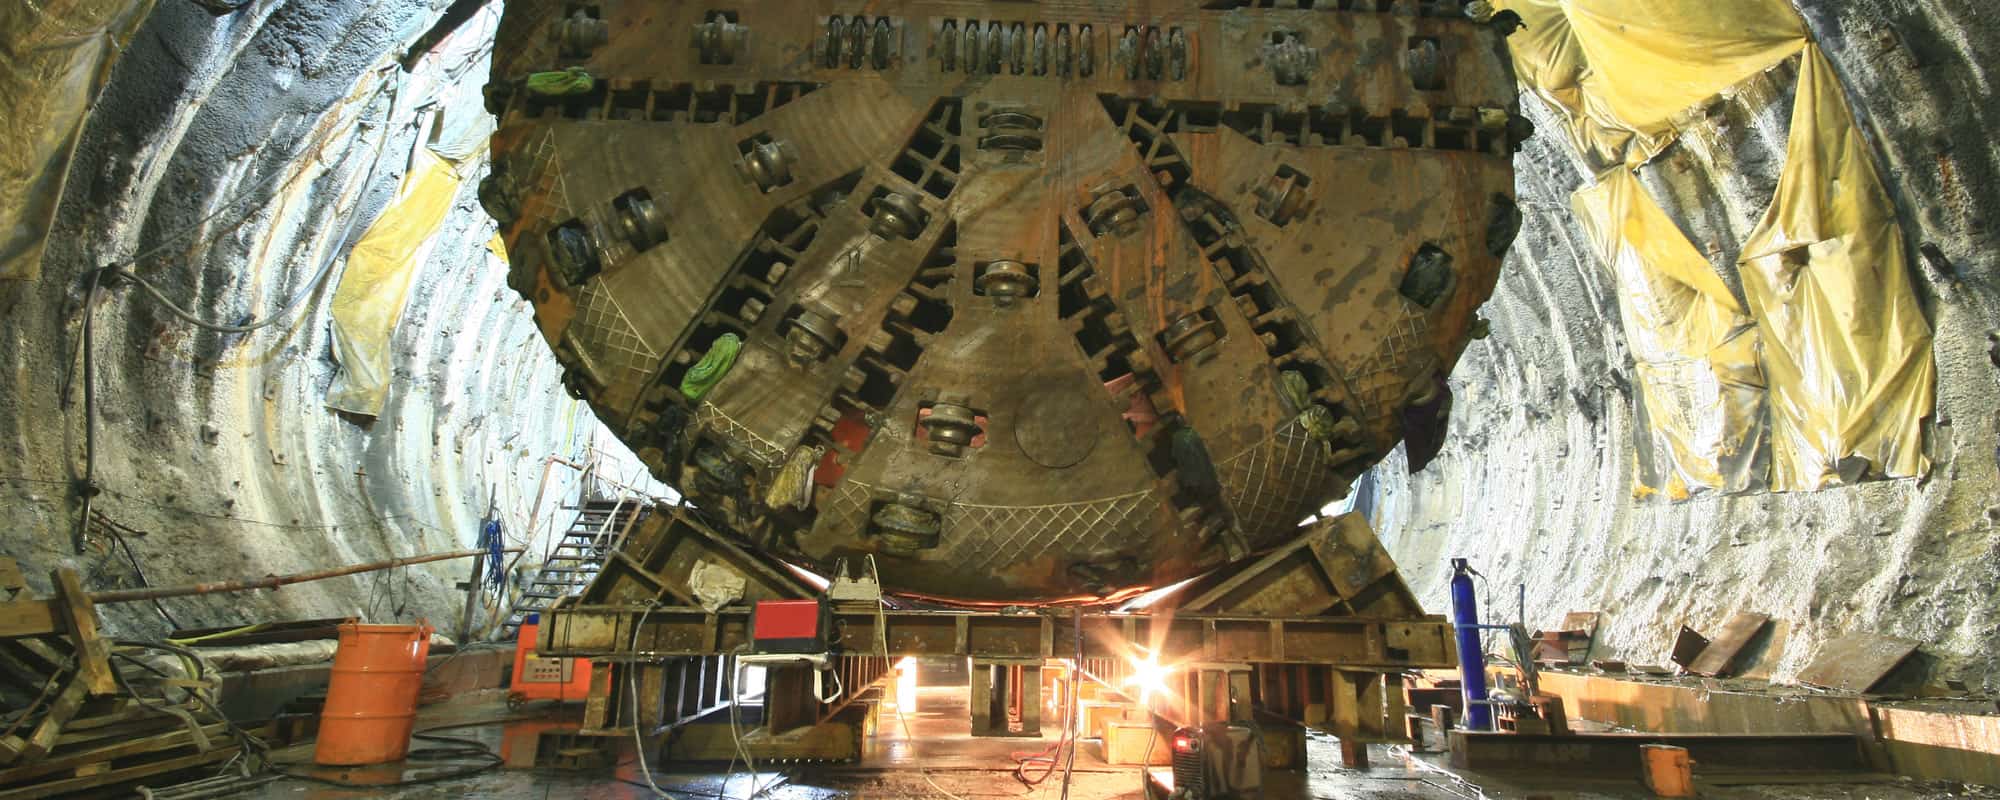 Building the World’s Longest Railway Tunnel